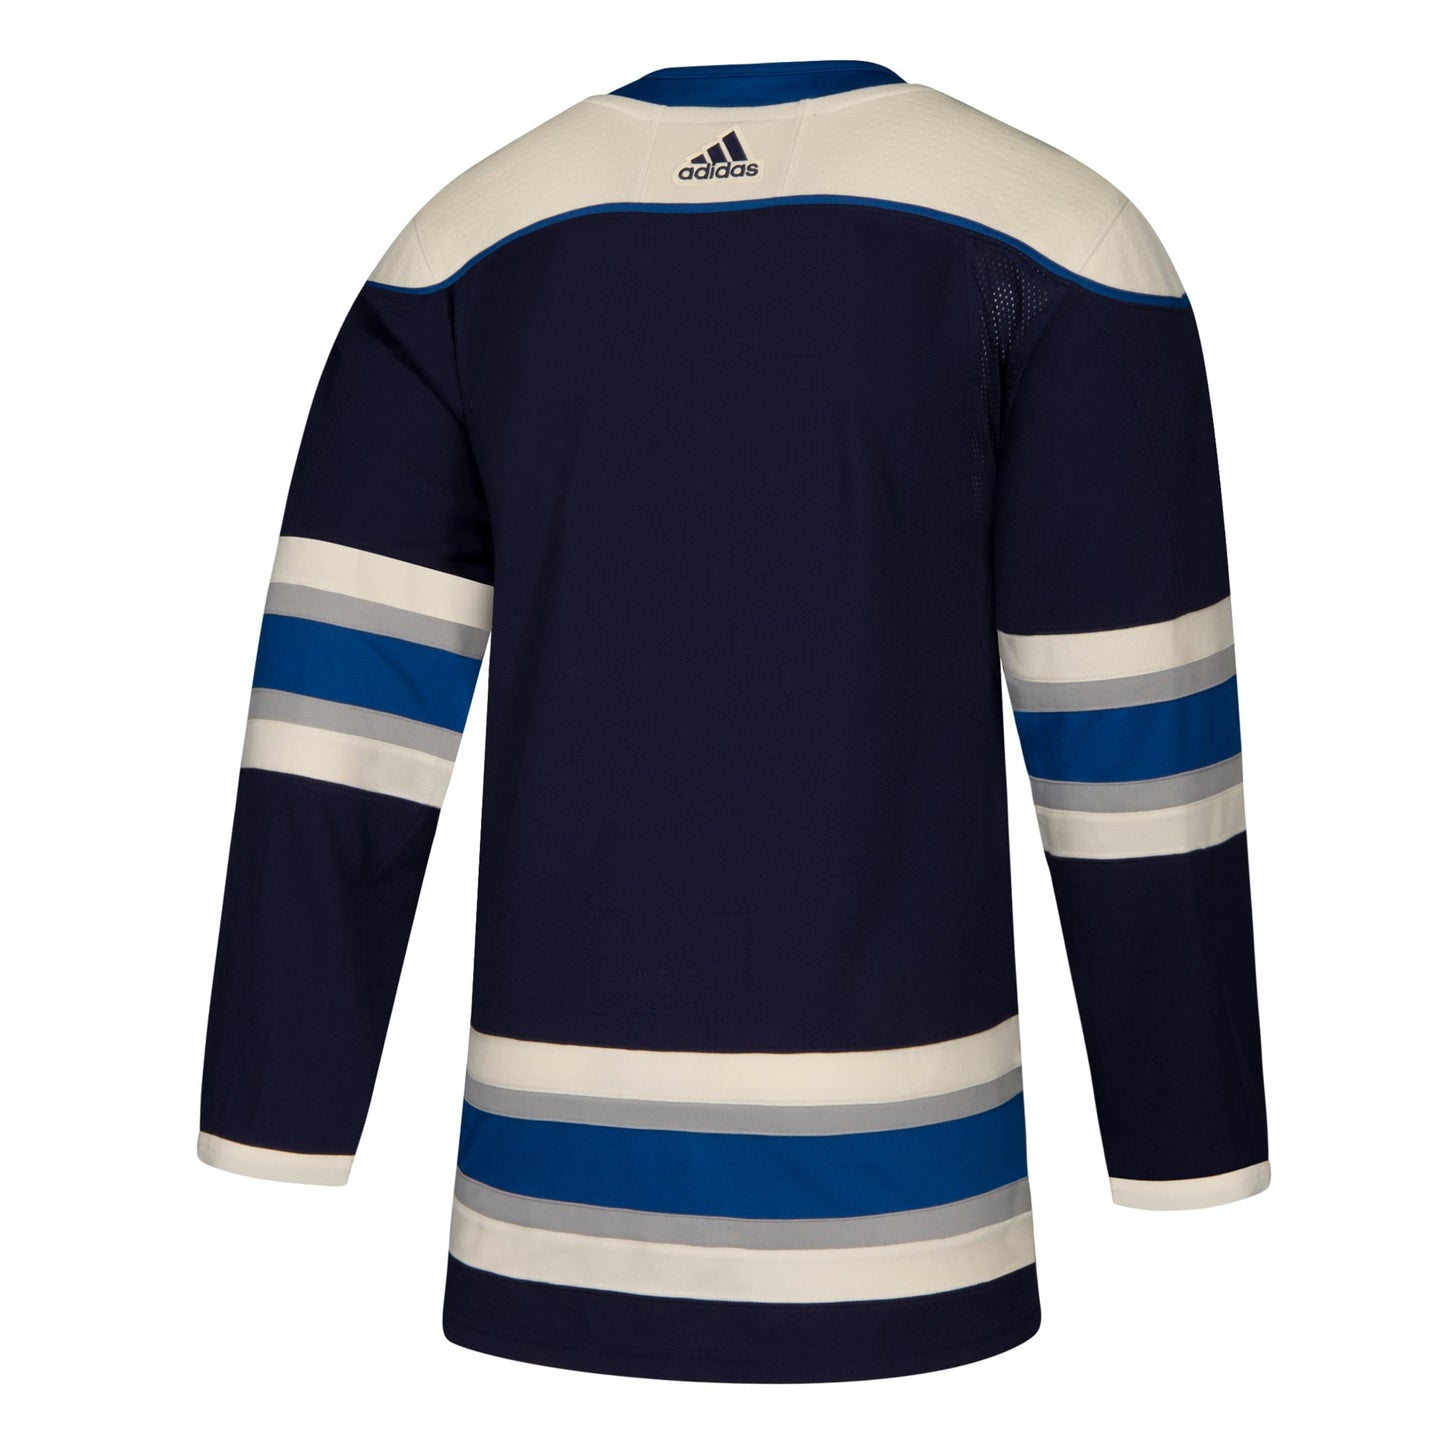 Columbus Blue Jackets adidas Authentic Alternate Blank Jersey - Navy